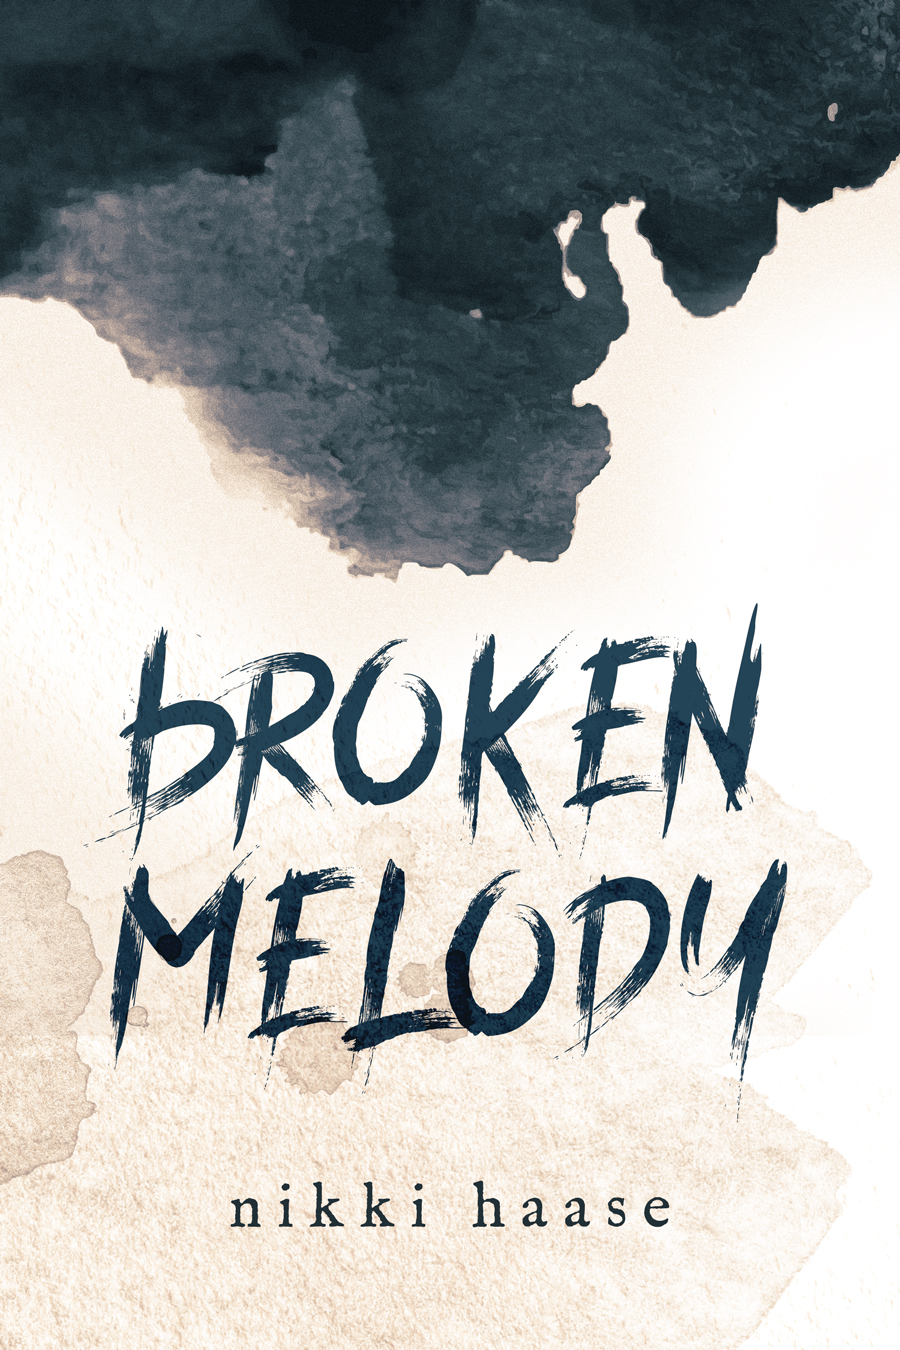 BrokenMelody-f900-web